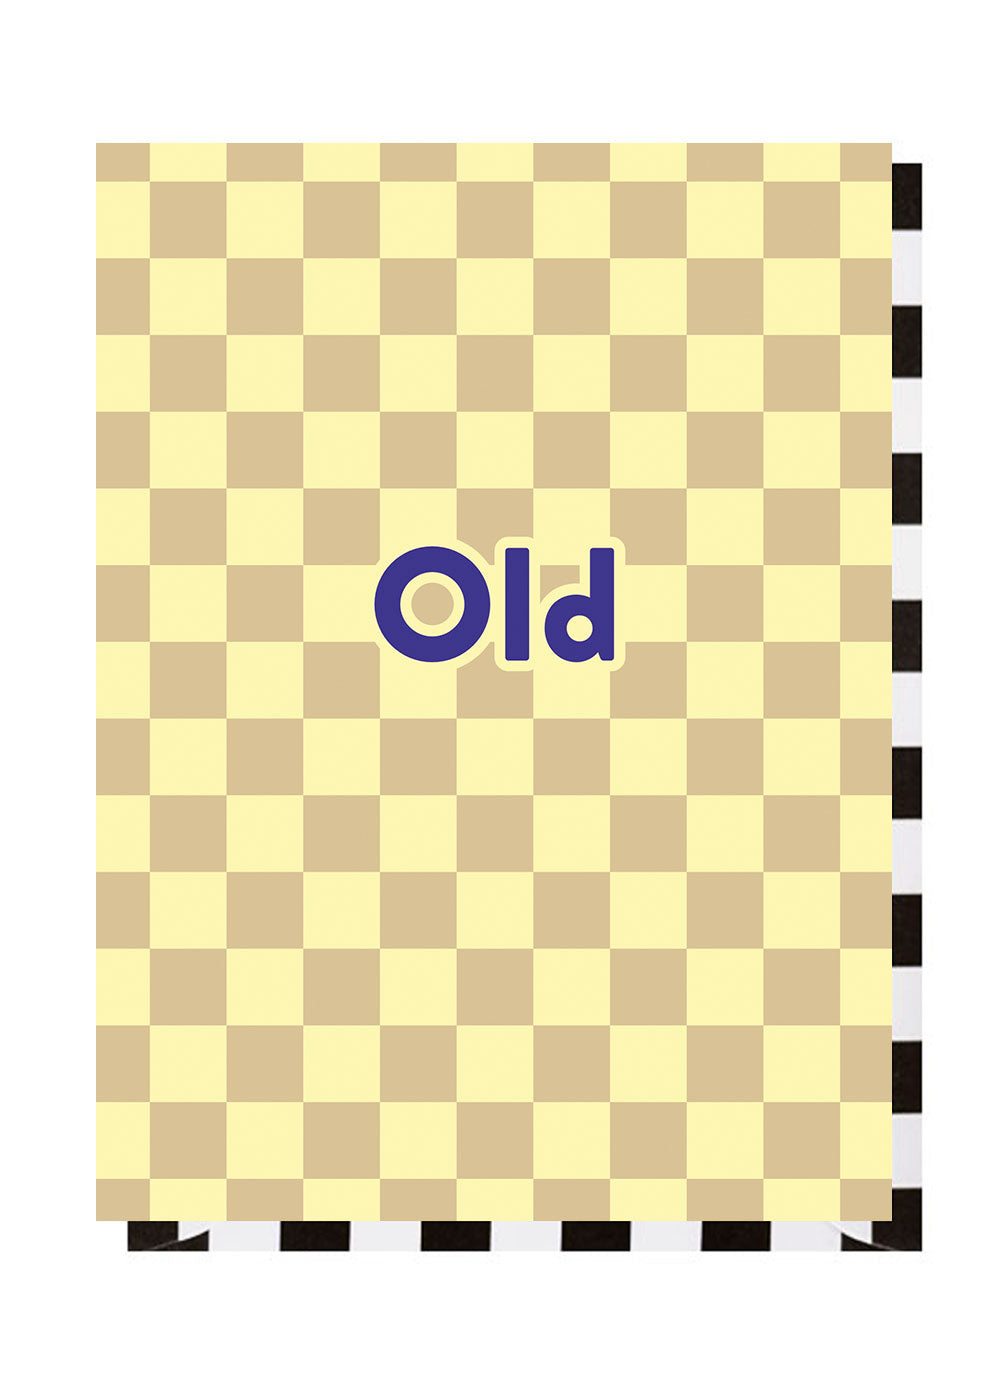 Old Checkerboard Birthday Card